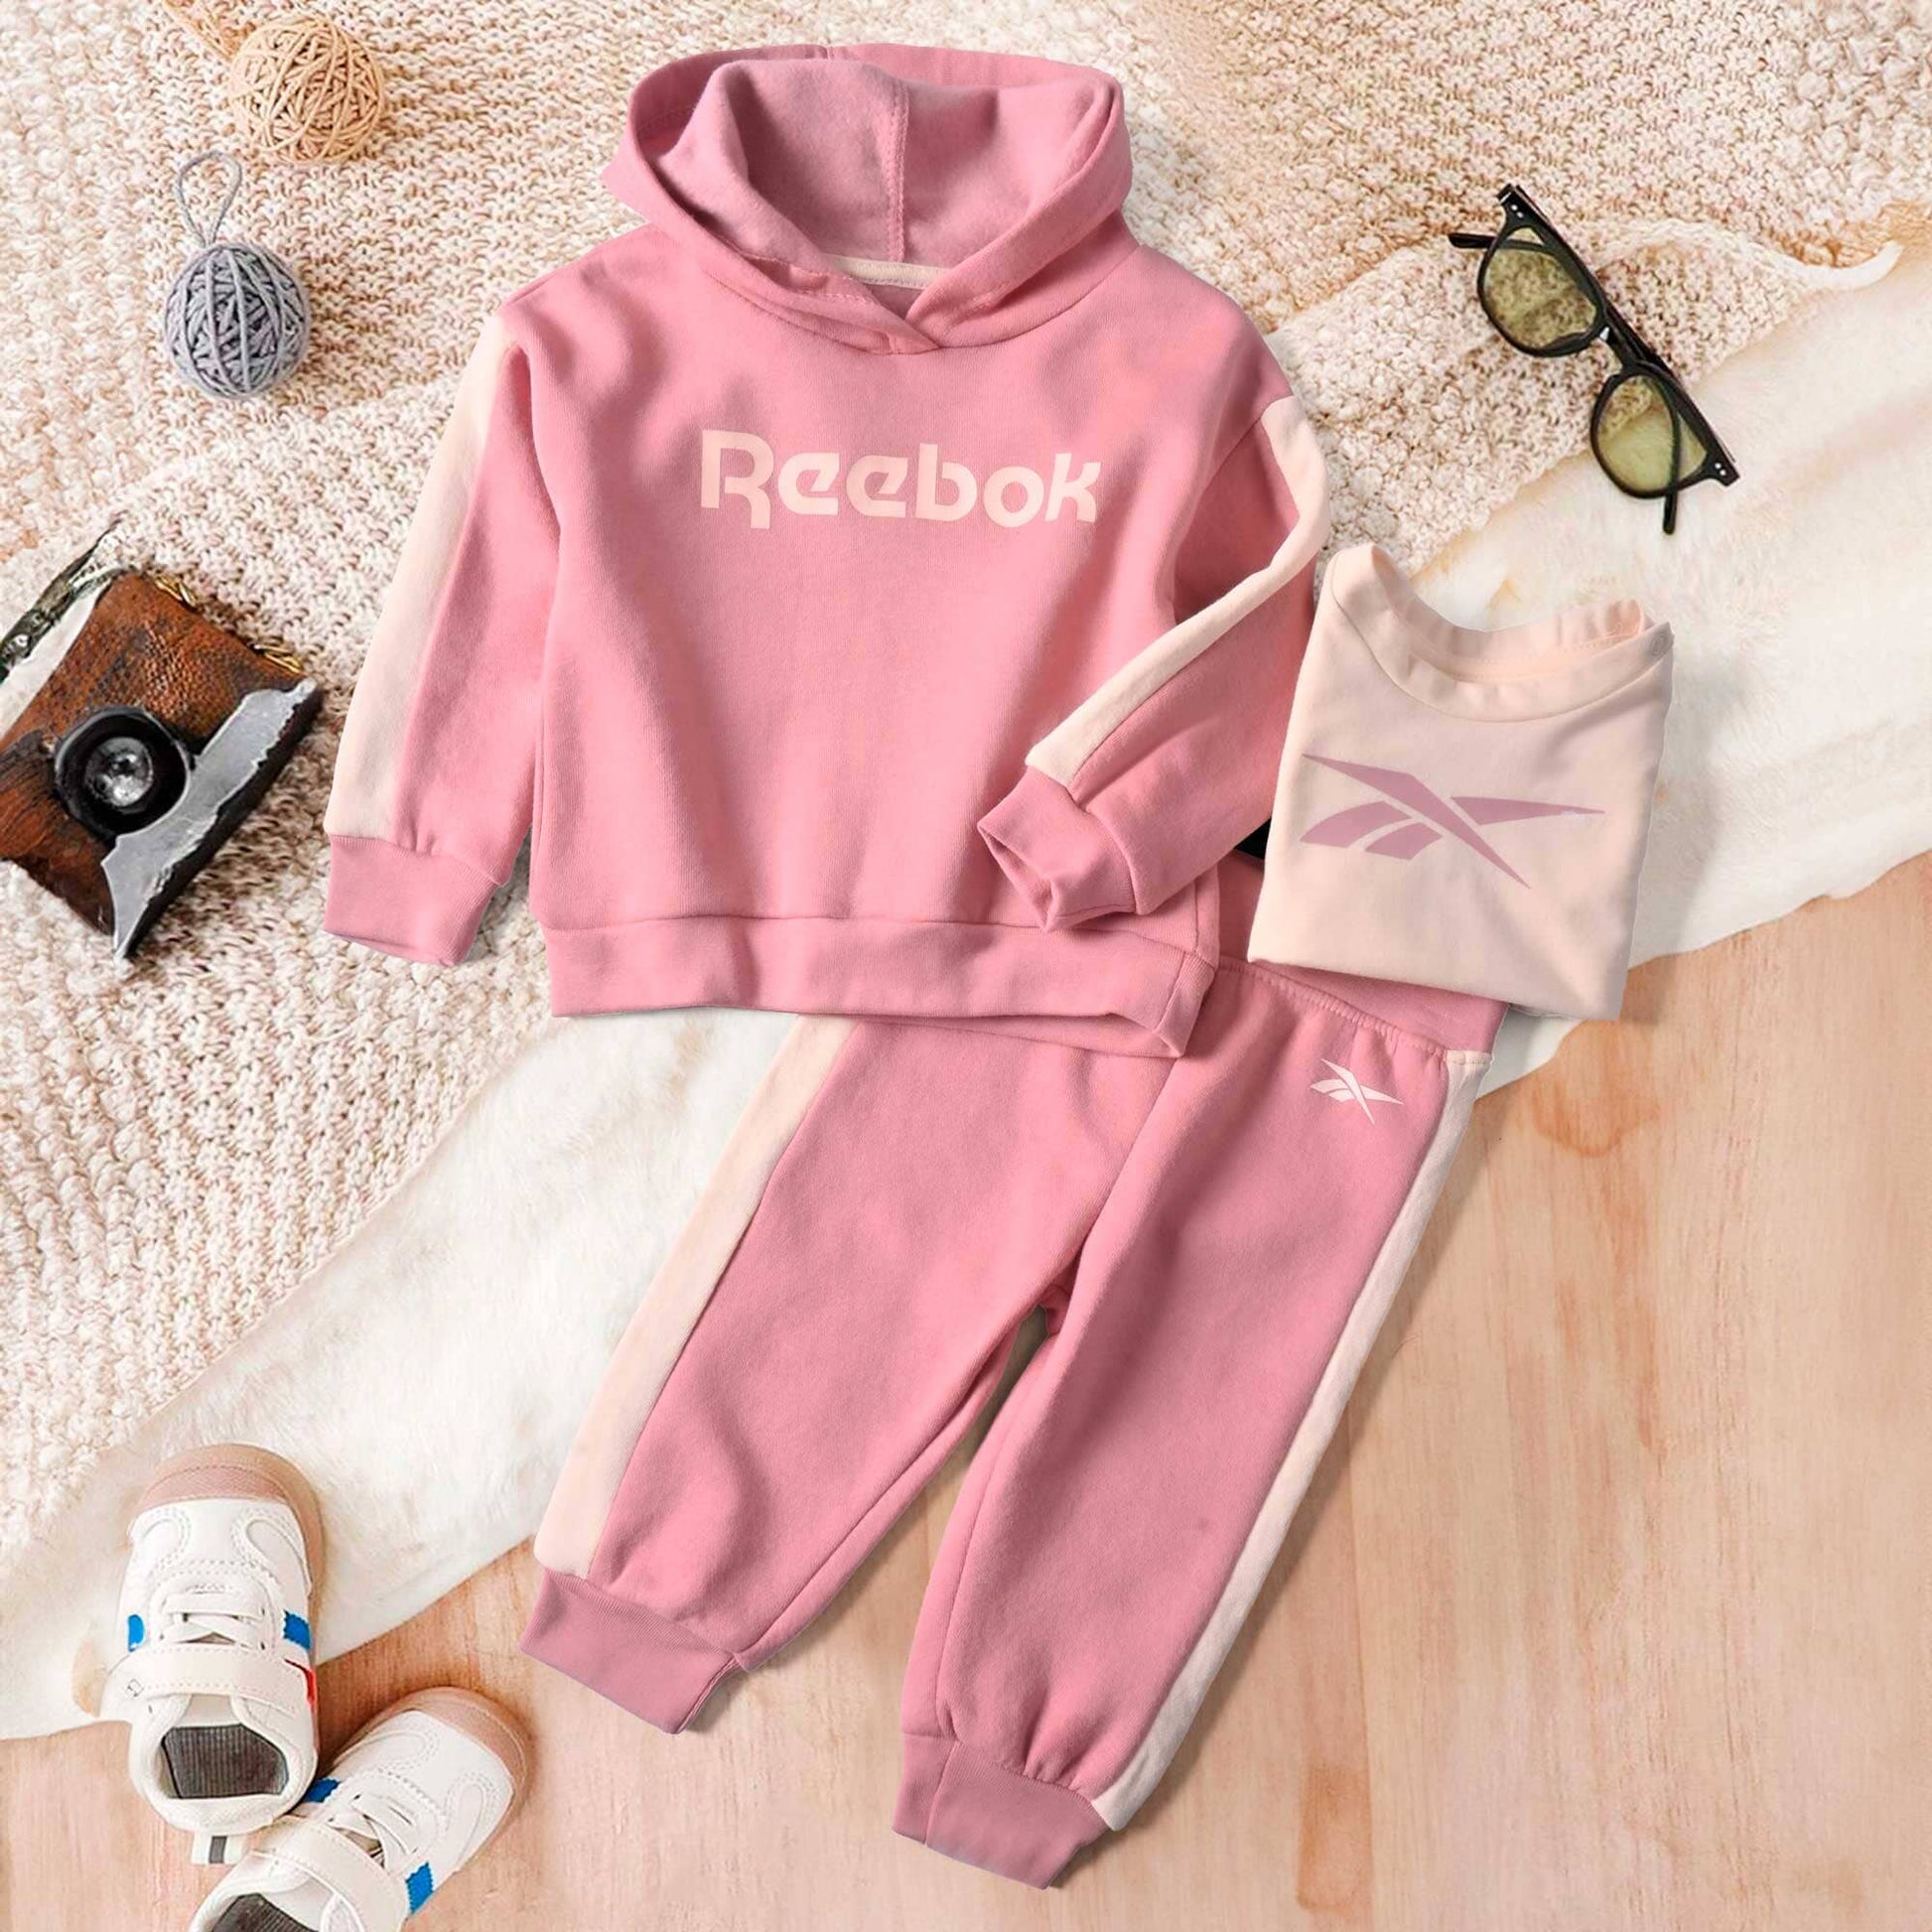 Reebok Kids' Contrast Design Sweat suit Set-3 Pcs Kid's tracksuit Fiza Lilac & Powder Pink 12 Months 